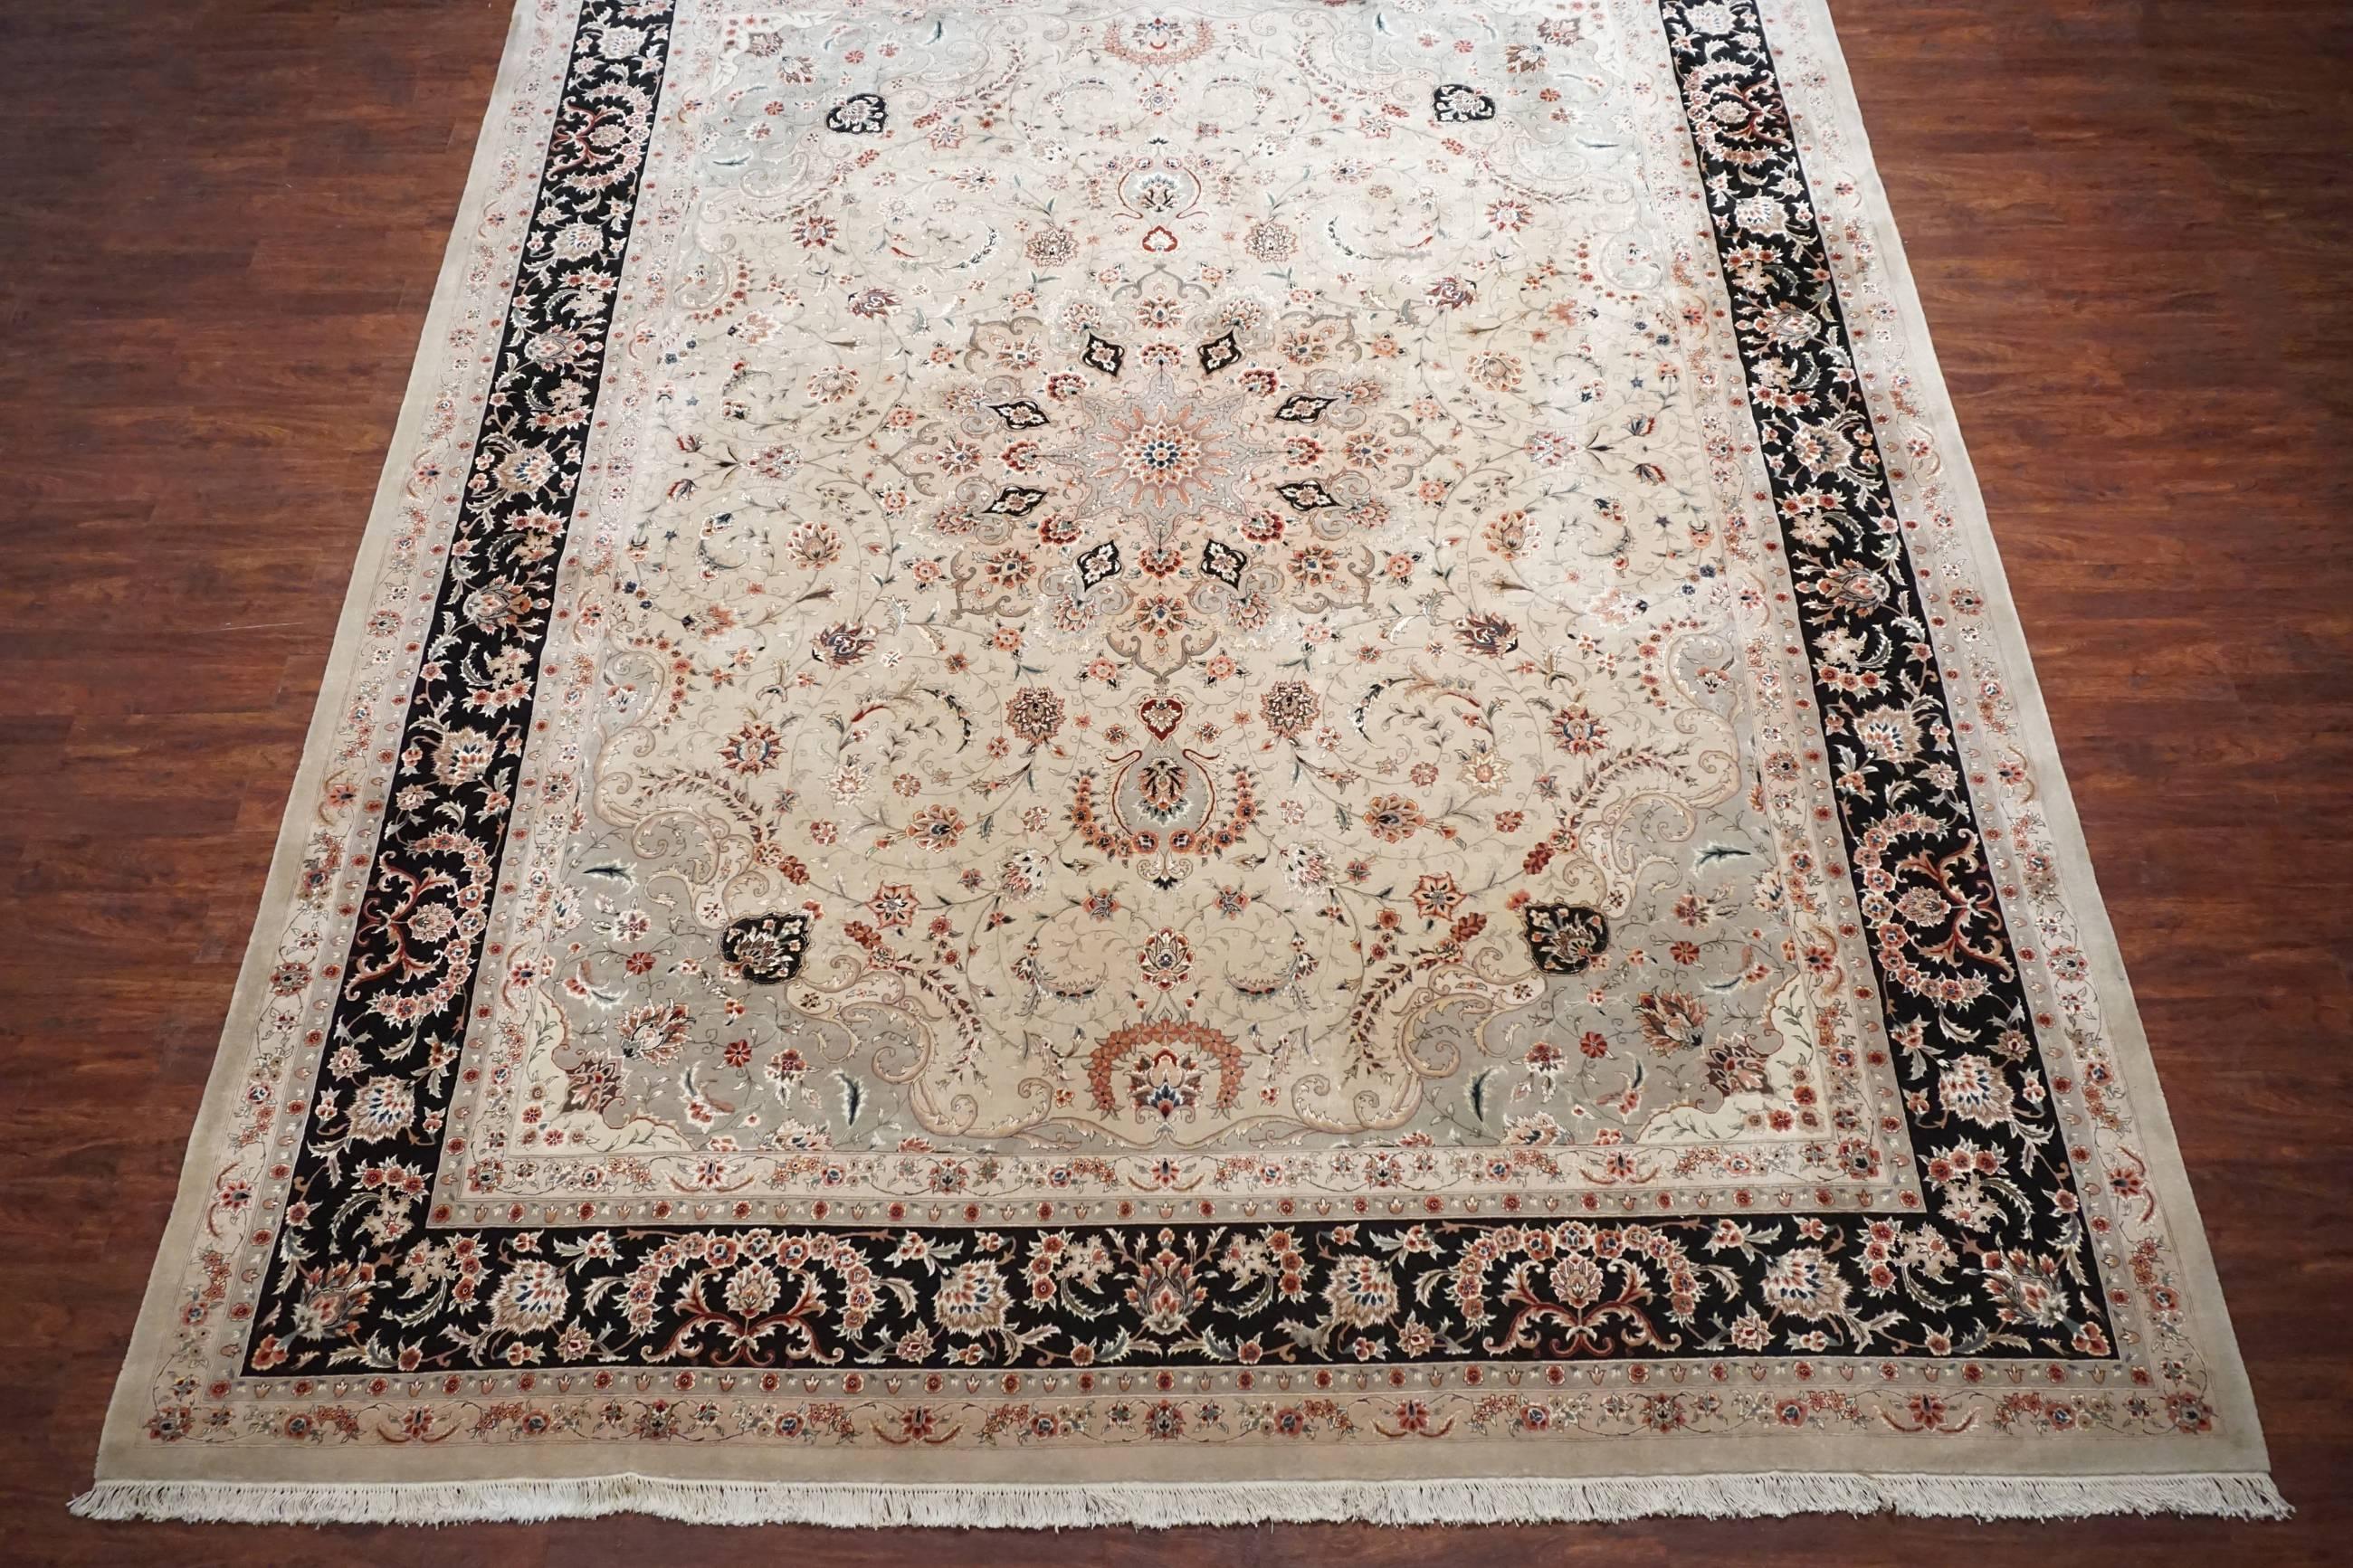 Wool and silk Tabriz area rug

Vintage, circa 1990

Measures: 12' x 15' 2